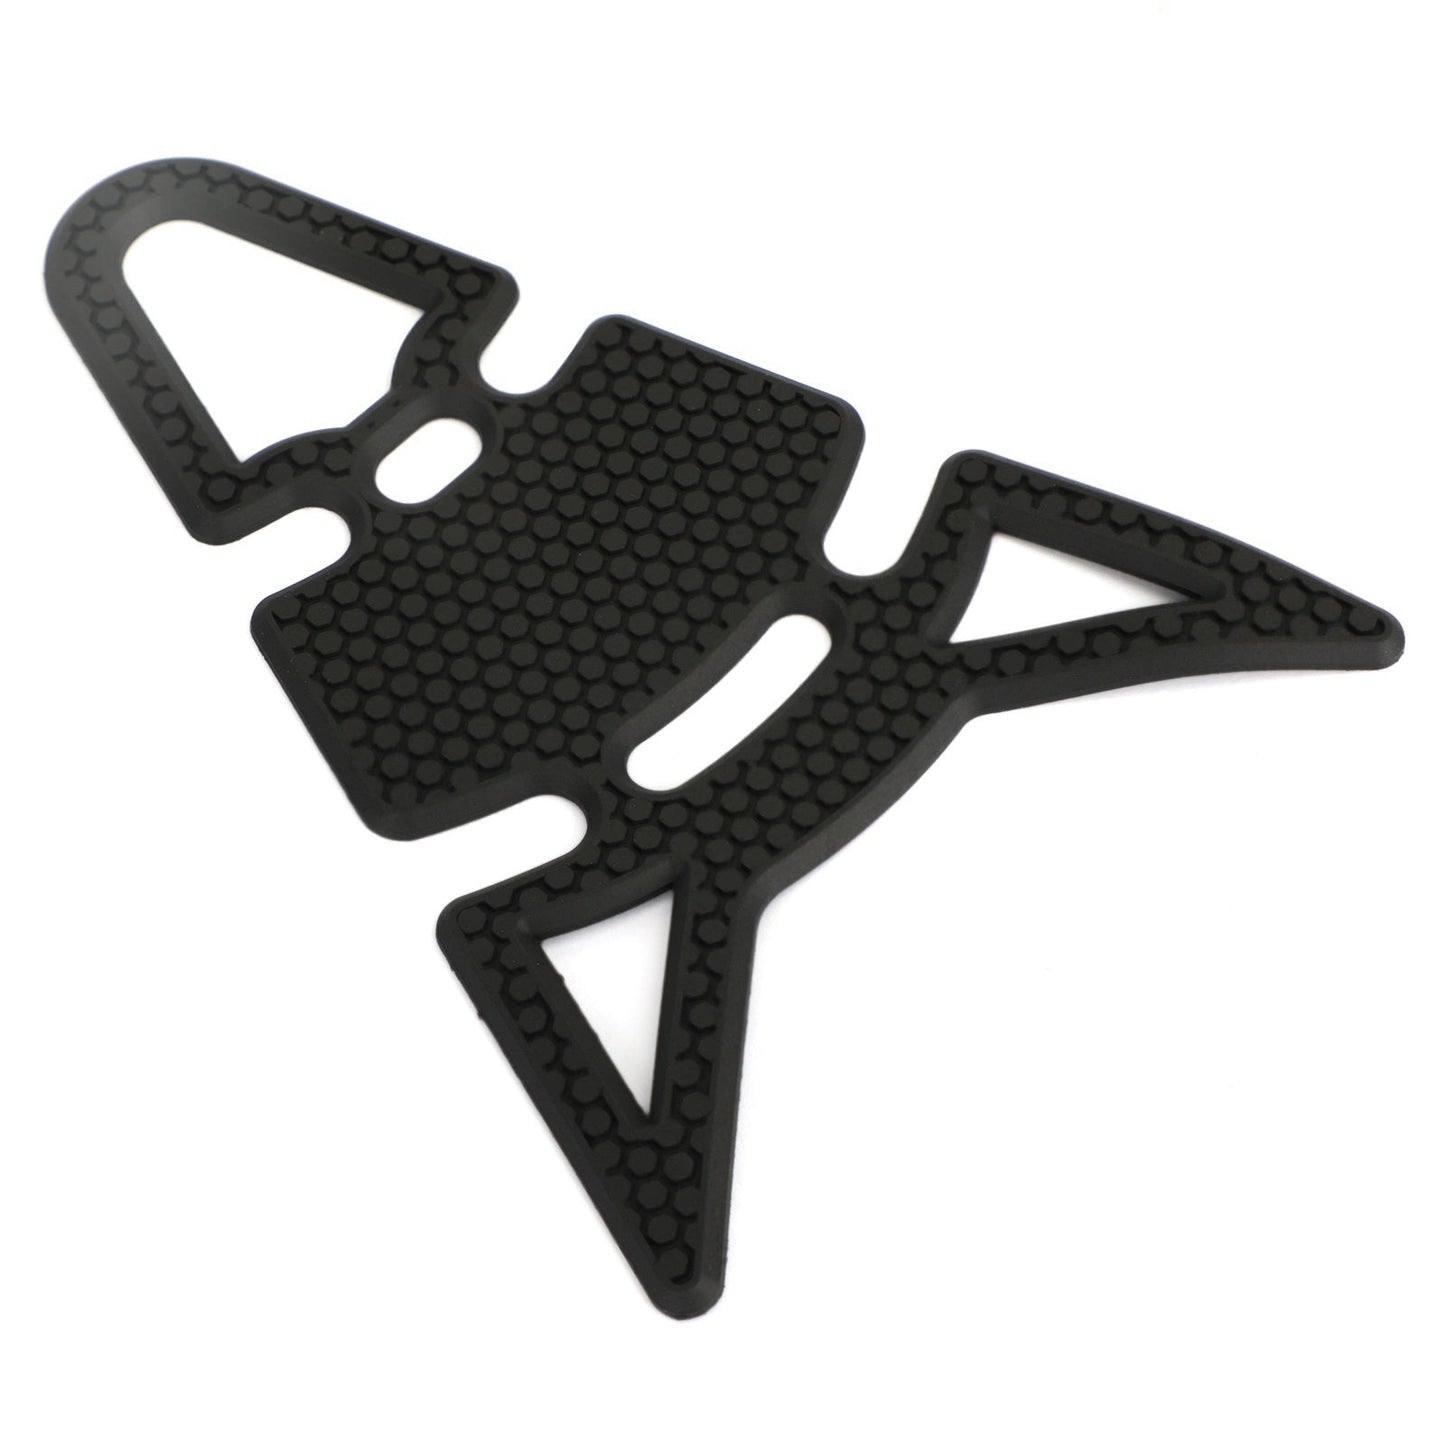 3D Black "Cat Ears" Rubber Gel Tank Pad Protector Sticker Motorcycle Motorbike